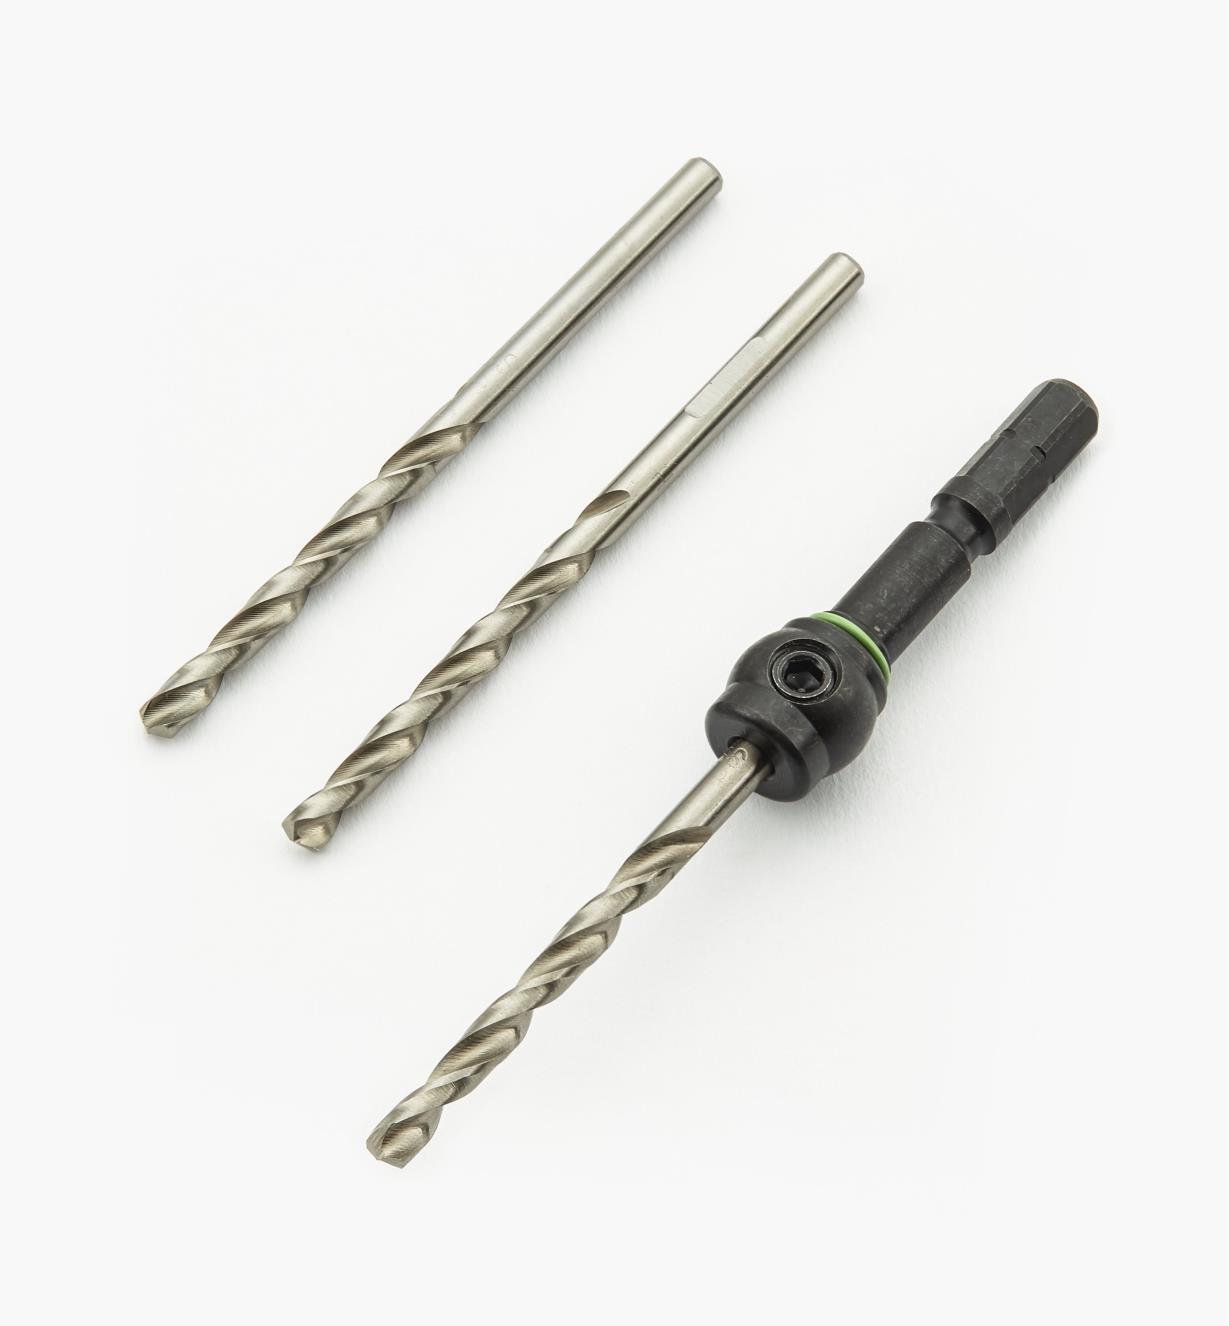 ZA493423 - Centrotec HSS Spiral Drill Bits - 4mm